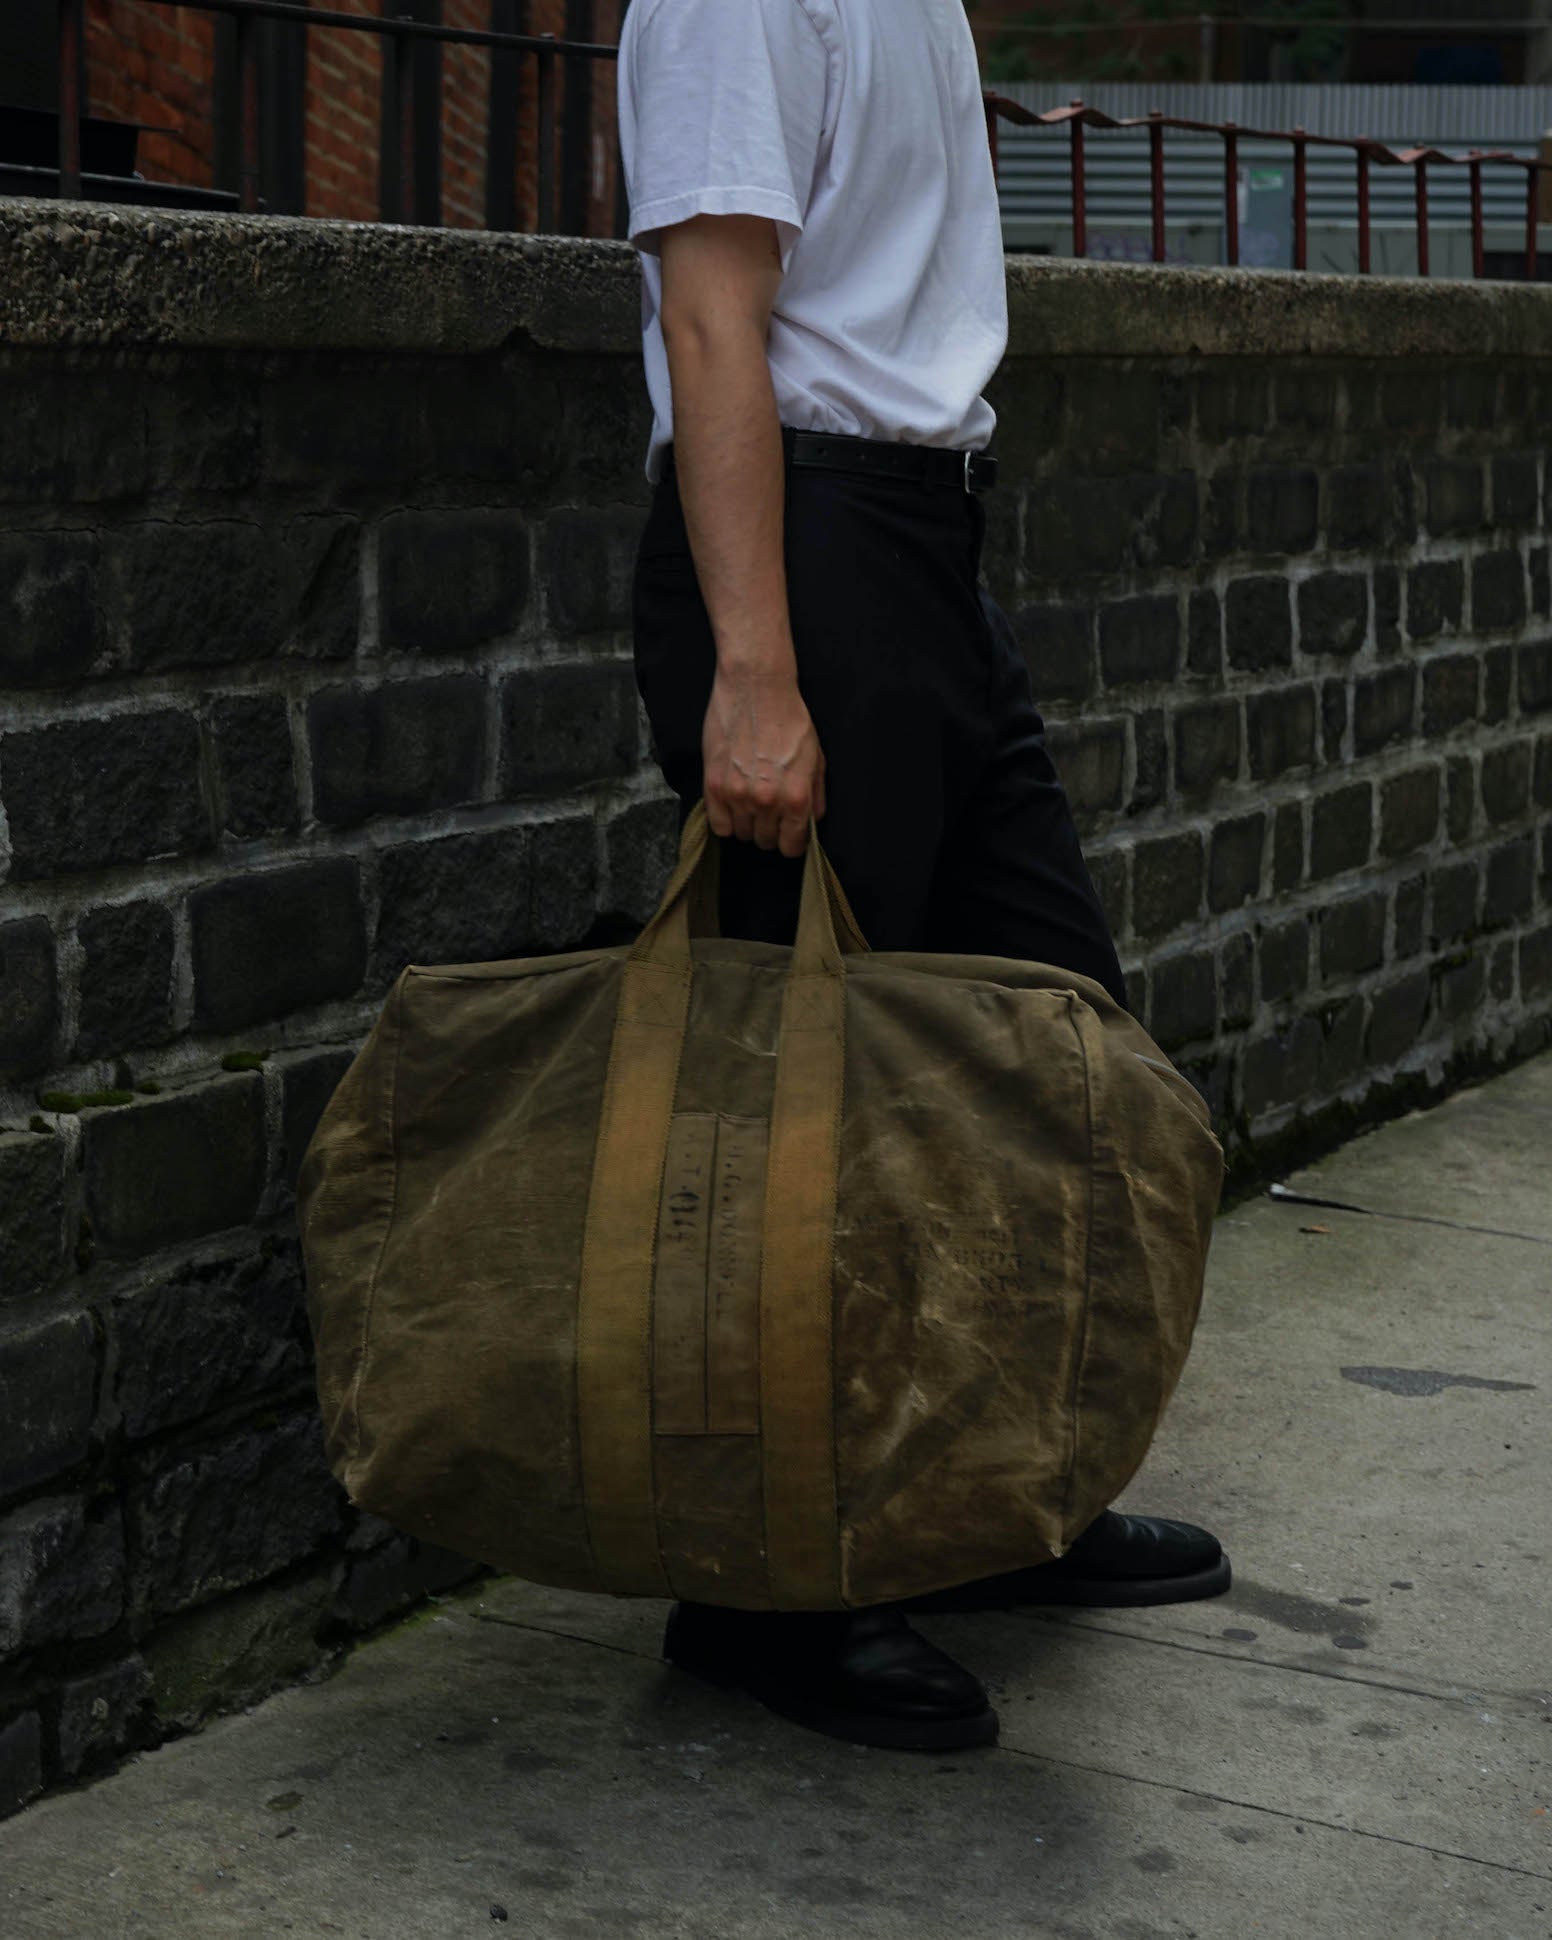 Aviator's Kit Bag